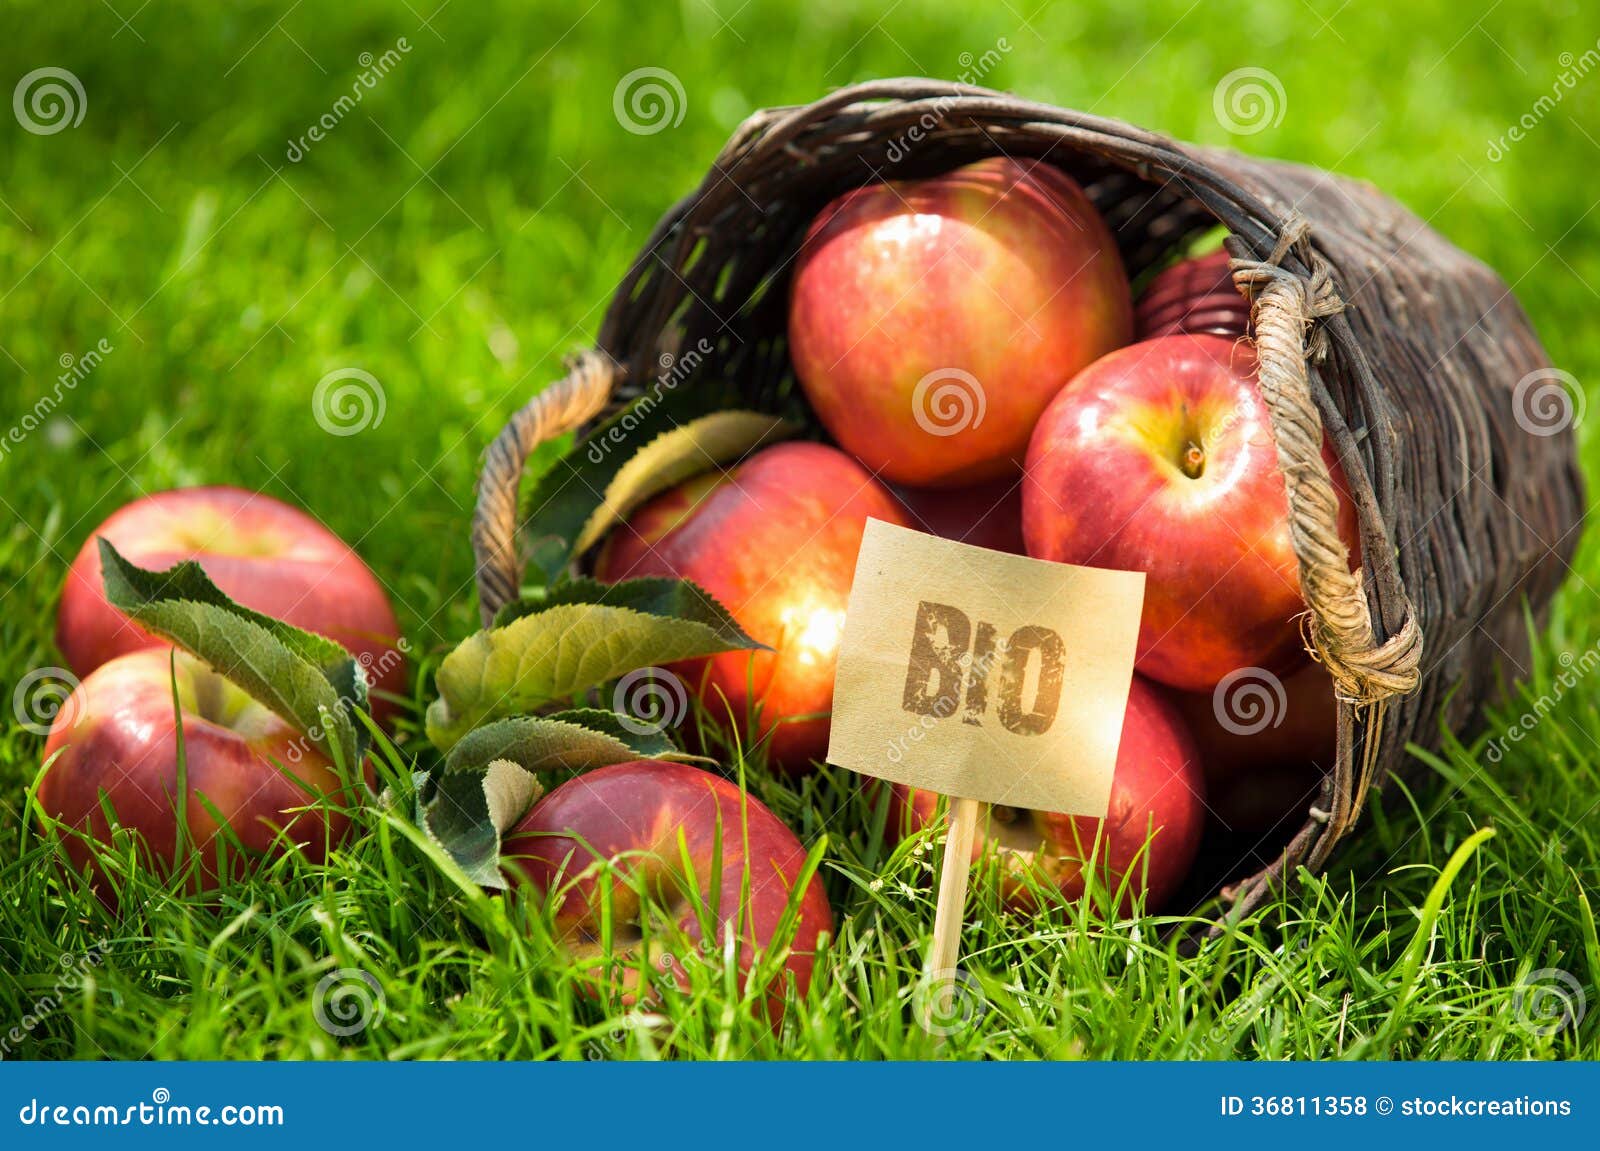 fresh bio apples on display at market